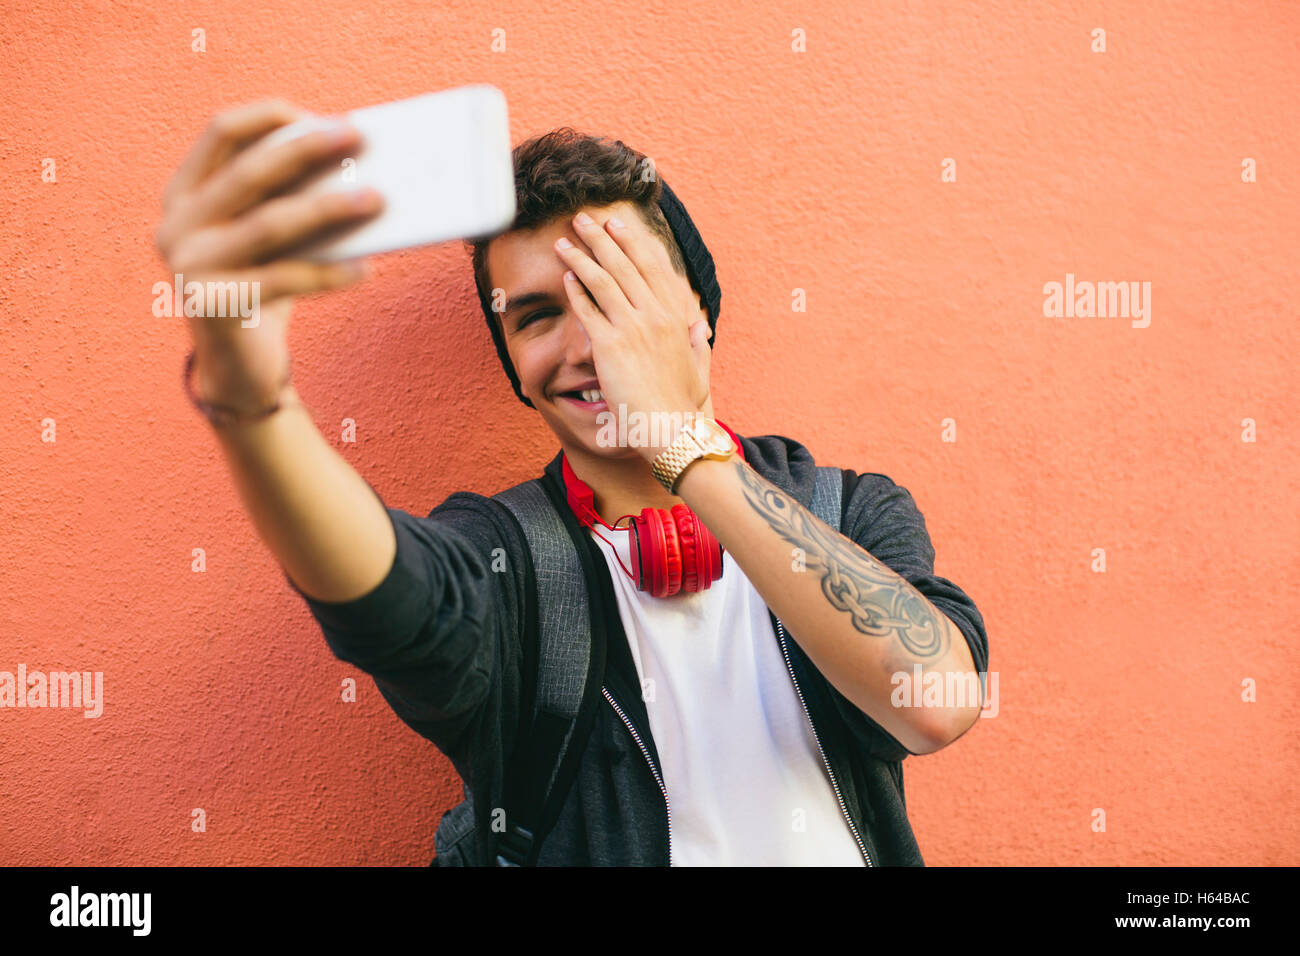 Teenager, smiling, selfie, smartphone Stock Photo